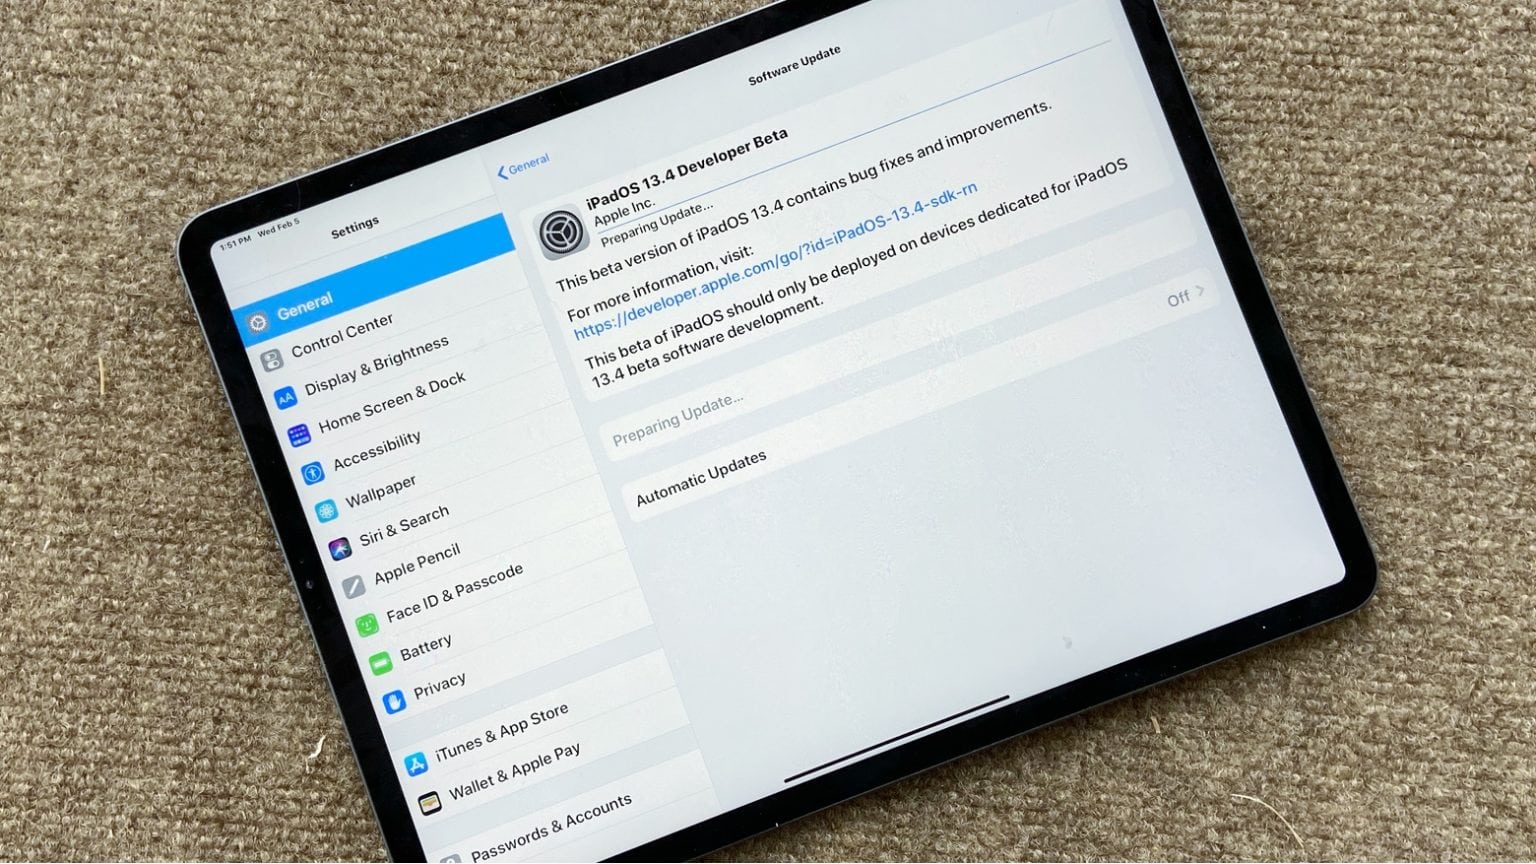 First iPadOS 13.4 Developer beta includes iCloud folder sharing